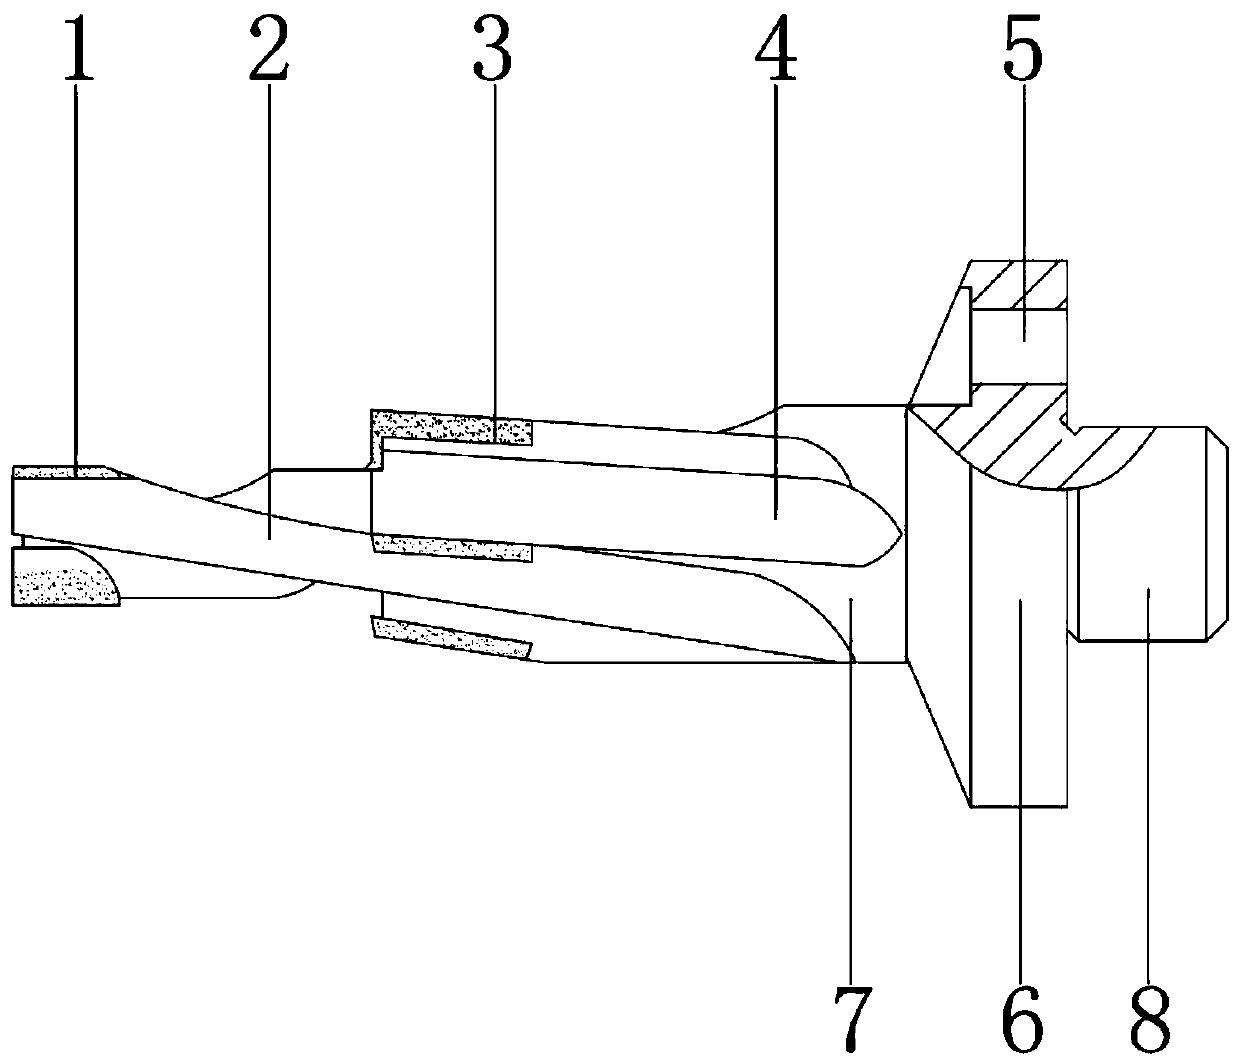 a rod milling cutter